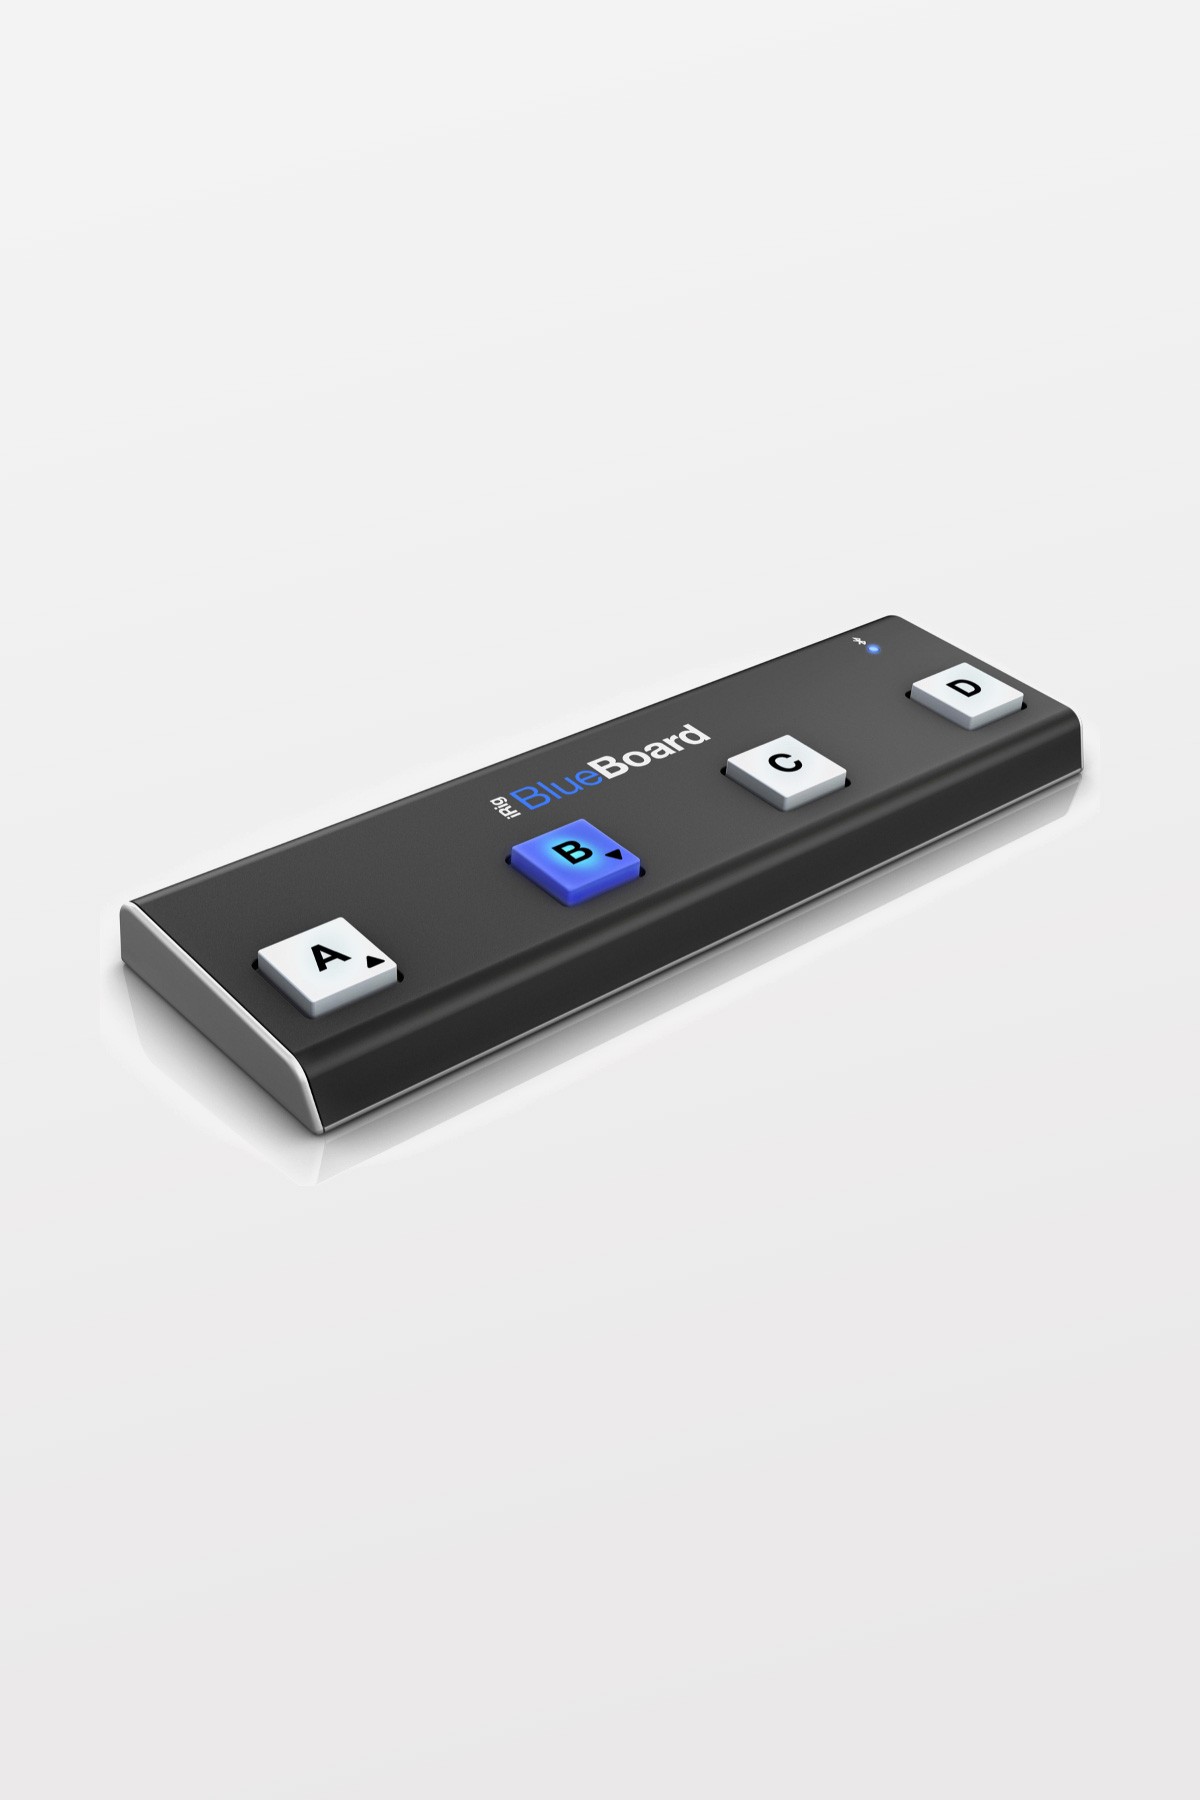 iRig BlueBoard - Bluetooth MIDI pedalboard controller for iOS and Mac